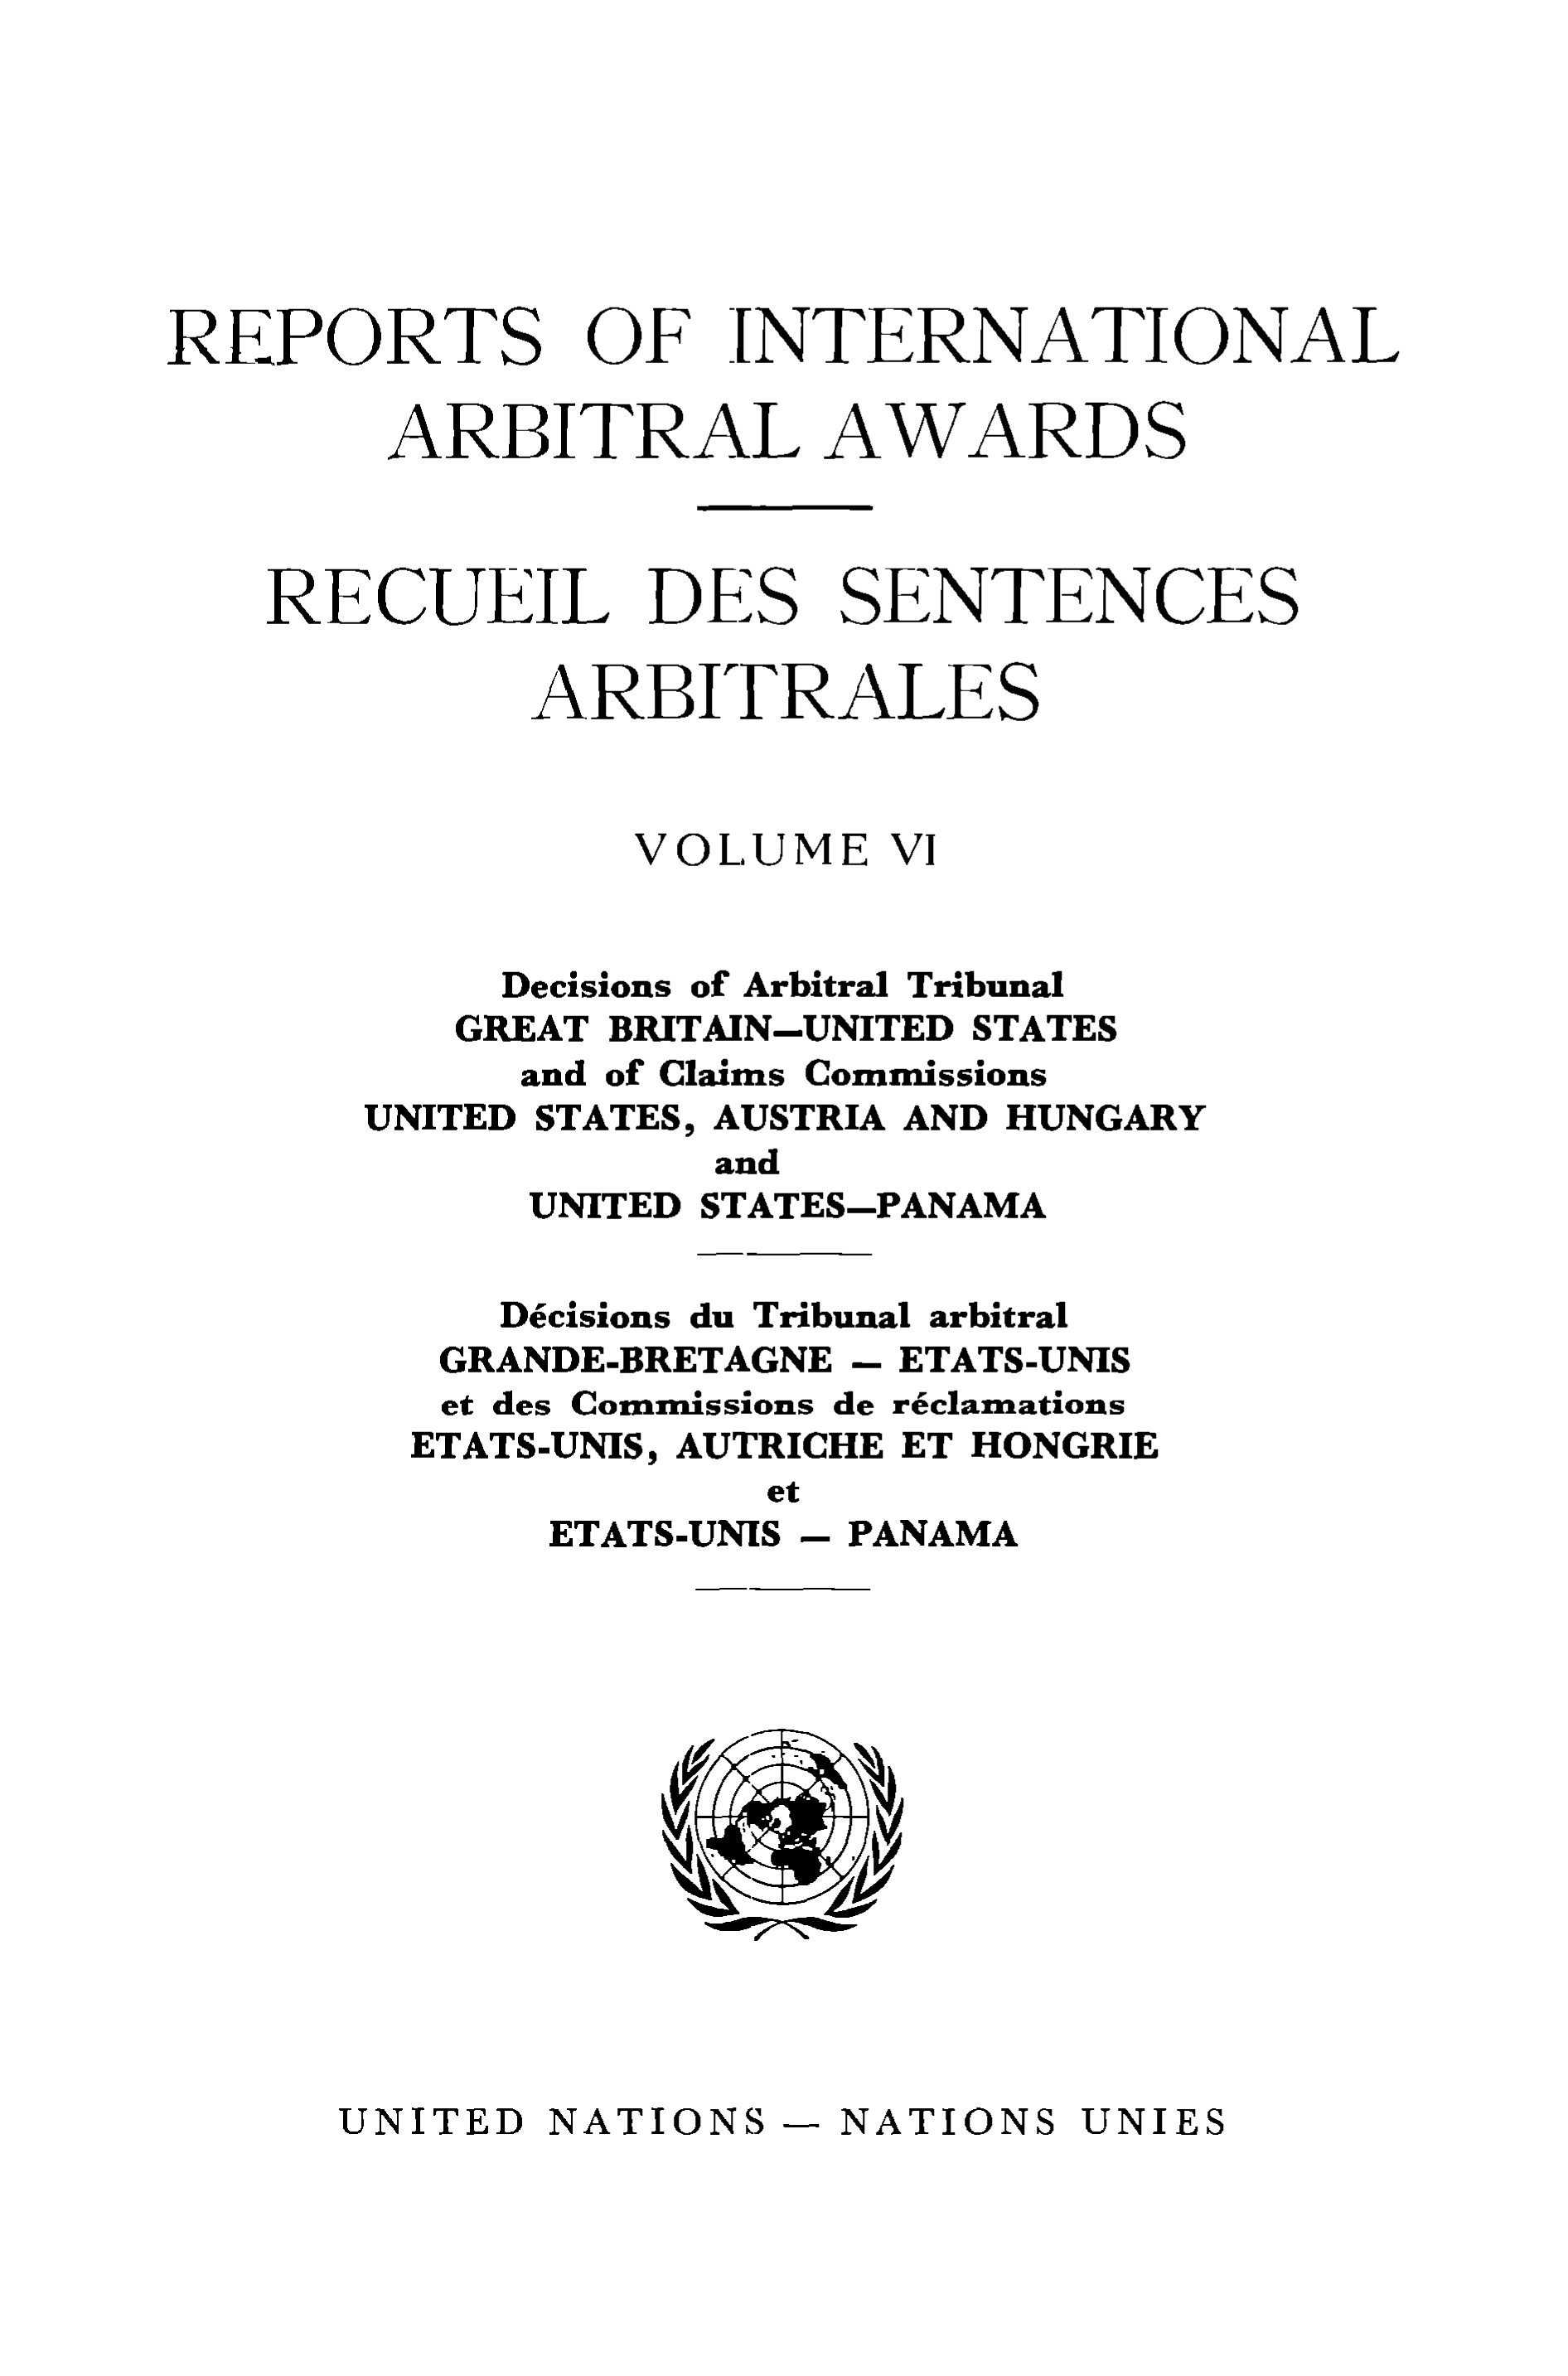 image of Recueil des sentences arbitrales, vol. VI